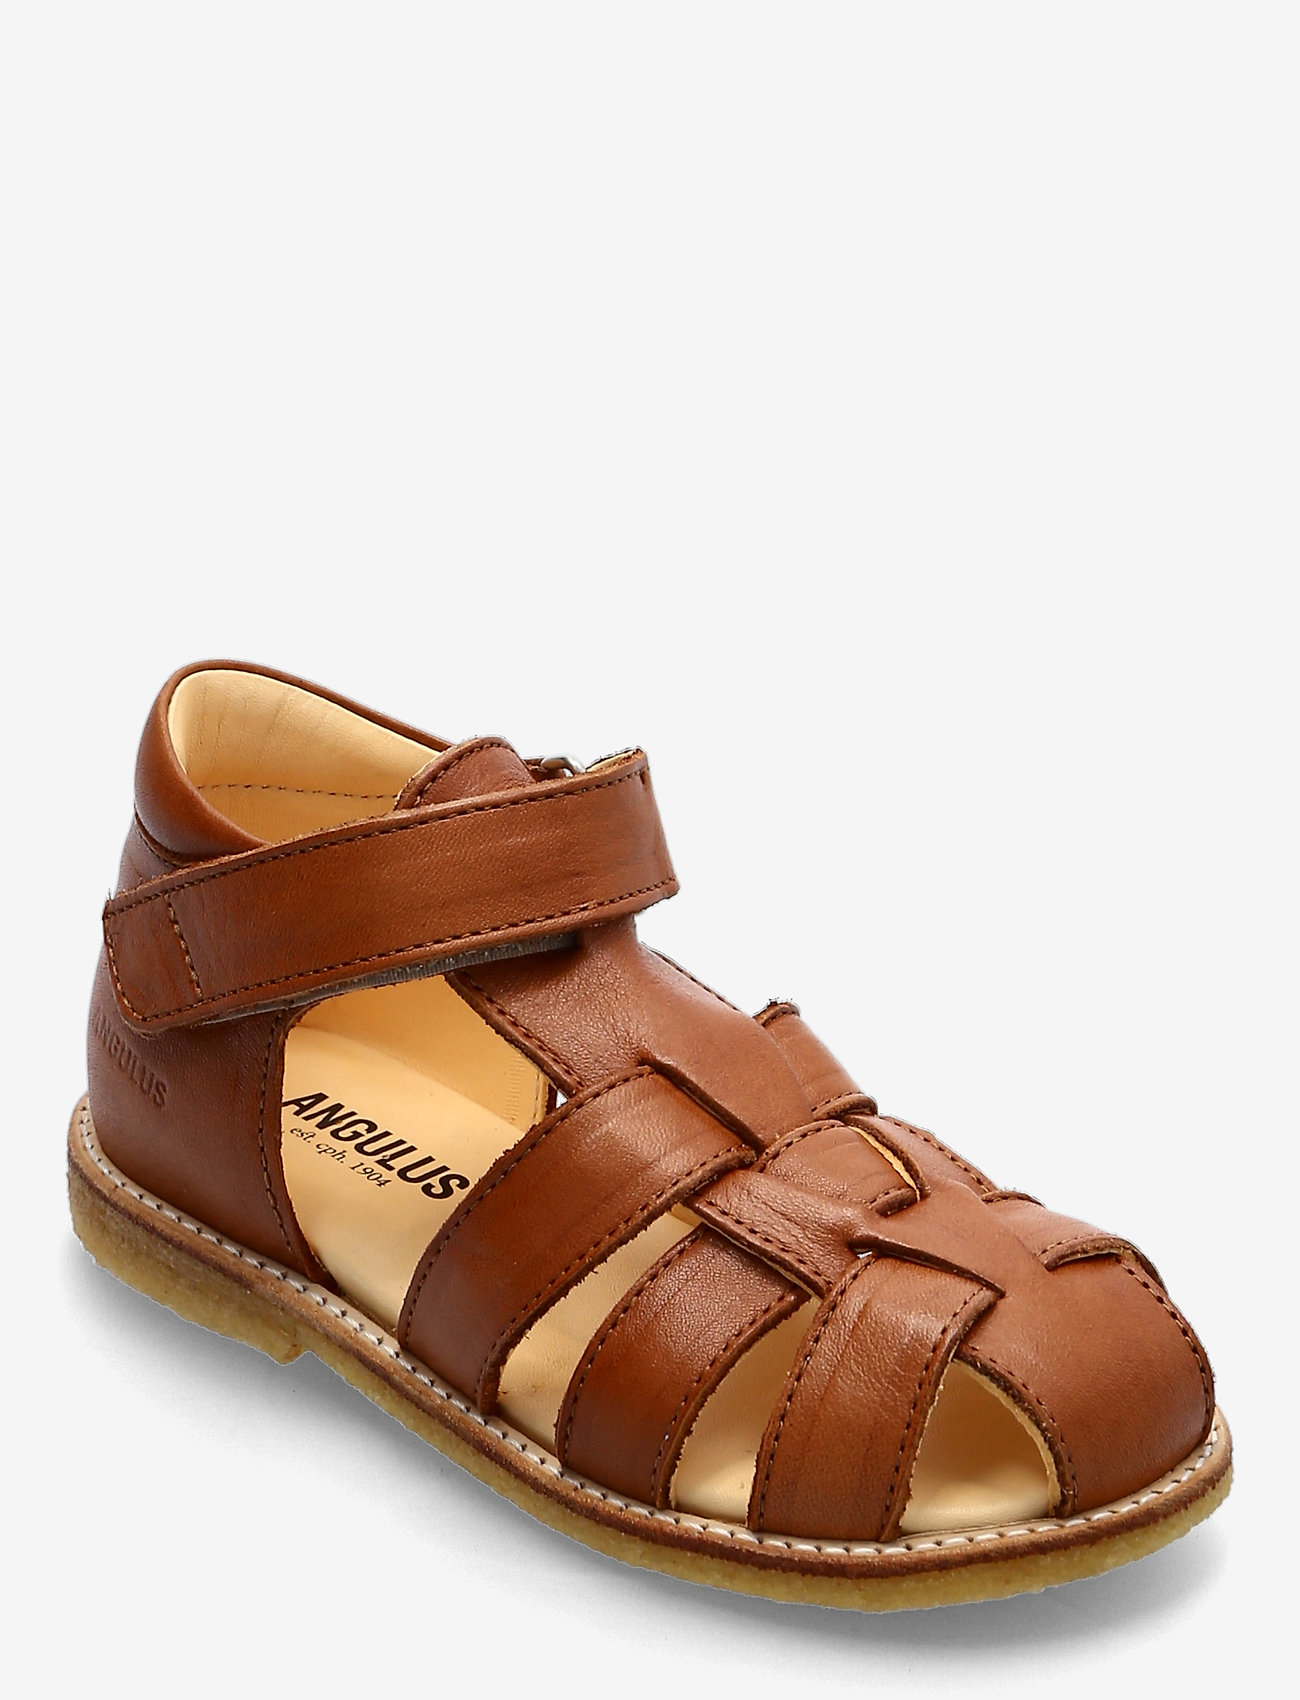 ANGULUS - Sandals - flat - closed toe -  - strap sandals - 1545 cognac - 0